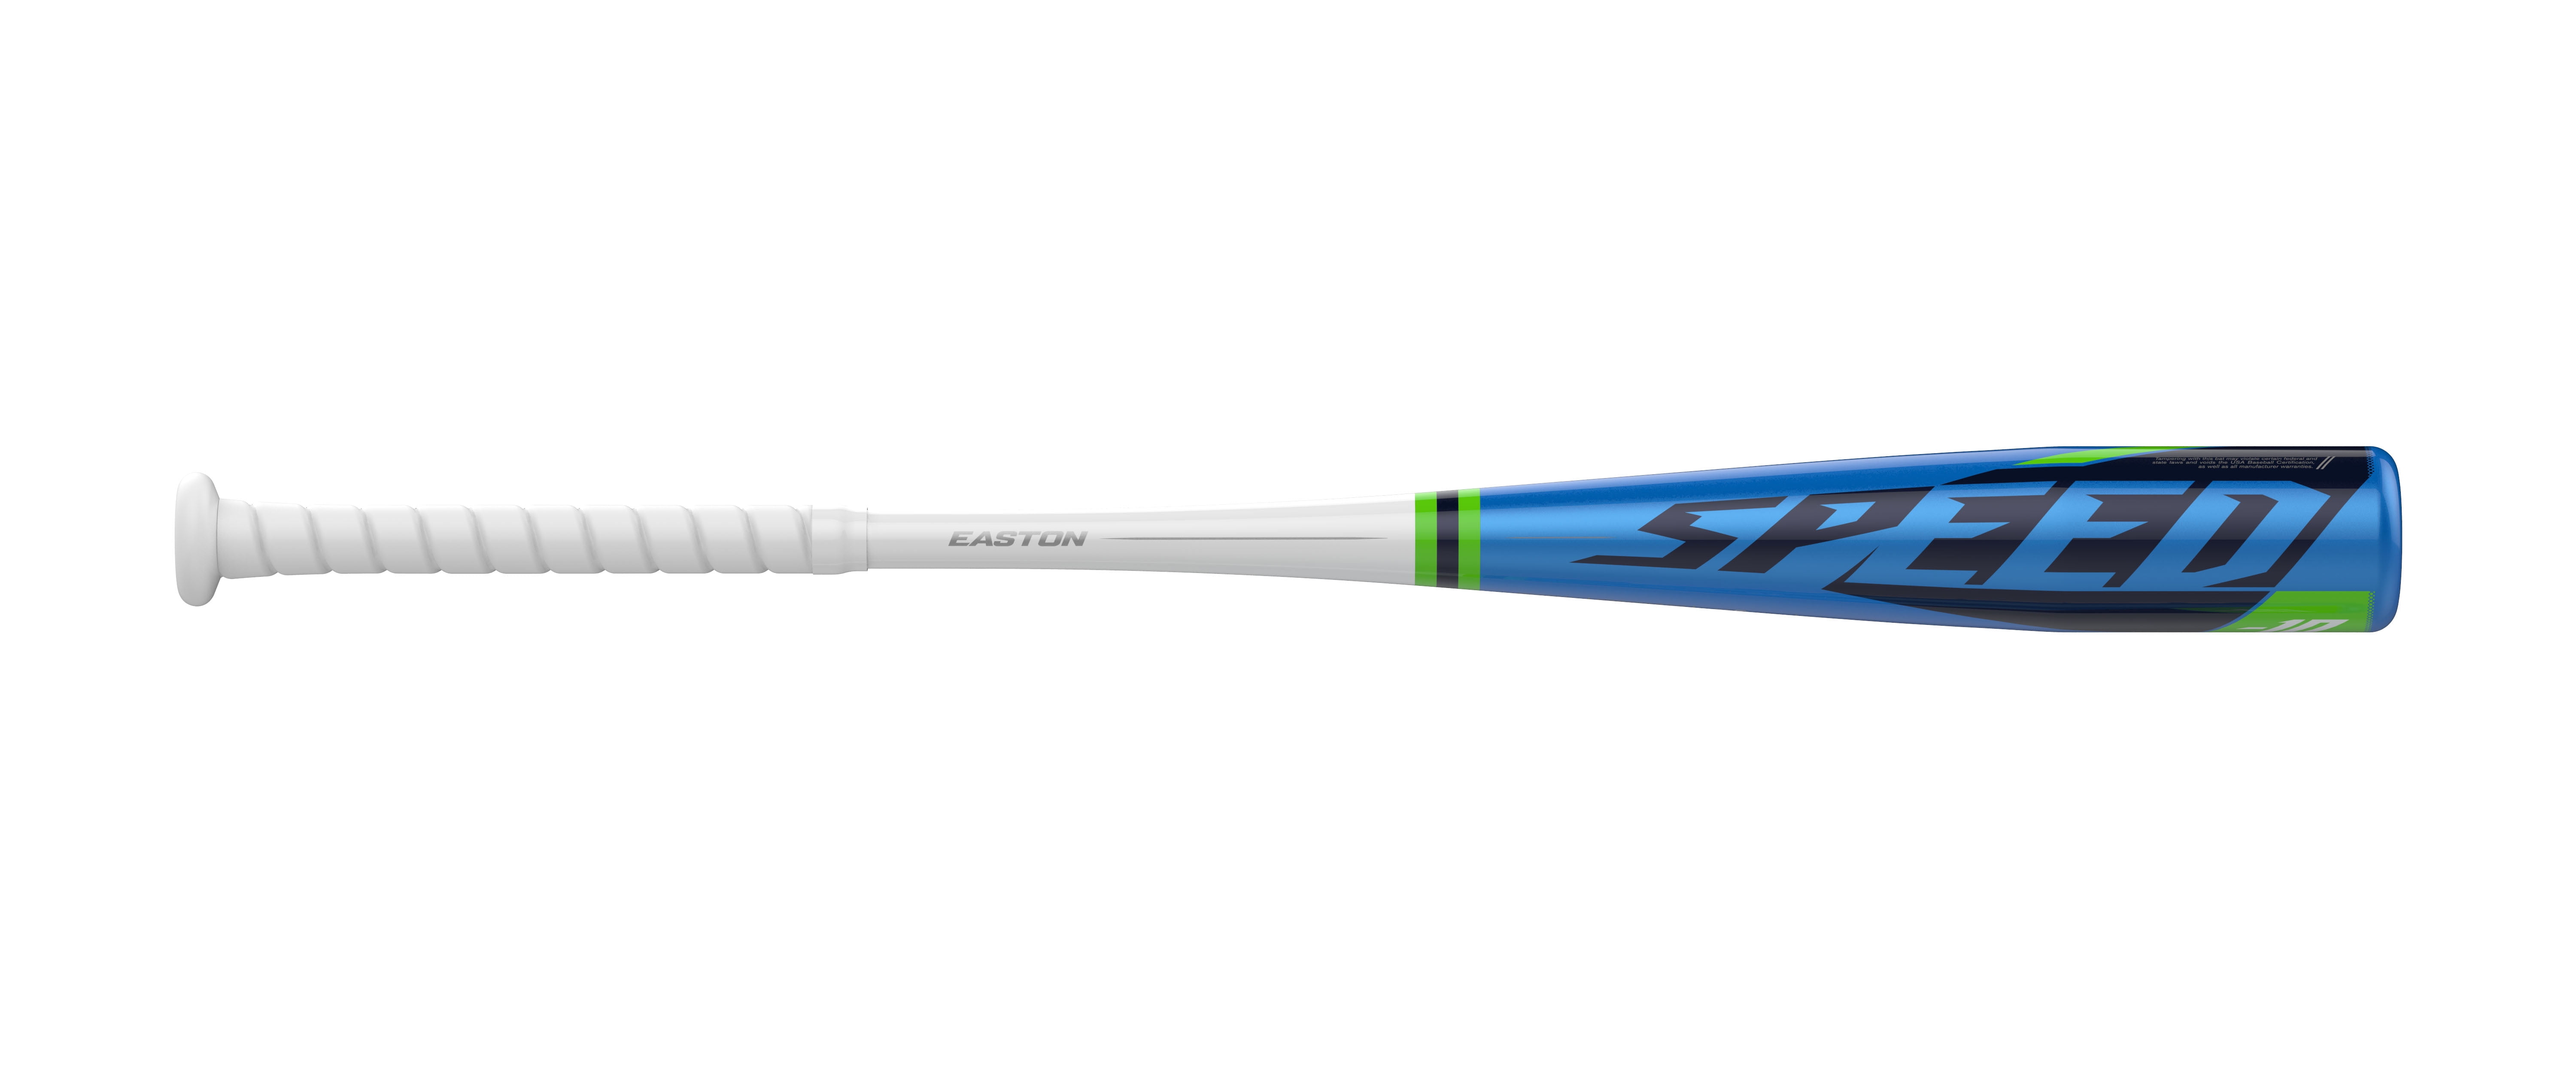 Aluminum Baseball Bat - 28 Inch - Ultra-Lightweight Fungo Bat for Softball,  Home Defense, Training, Security, and Protection - KOTIONOK